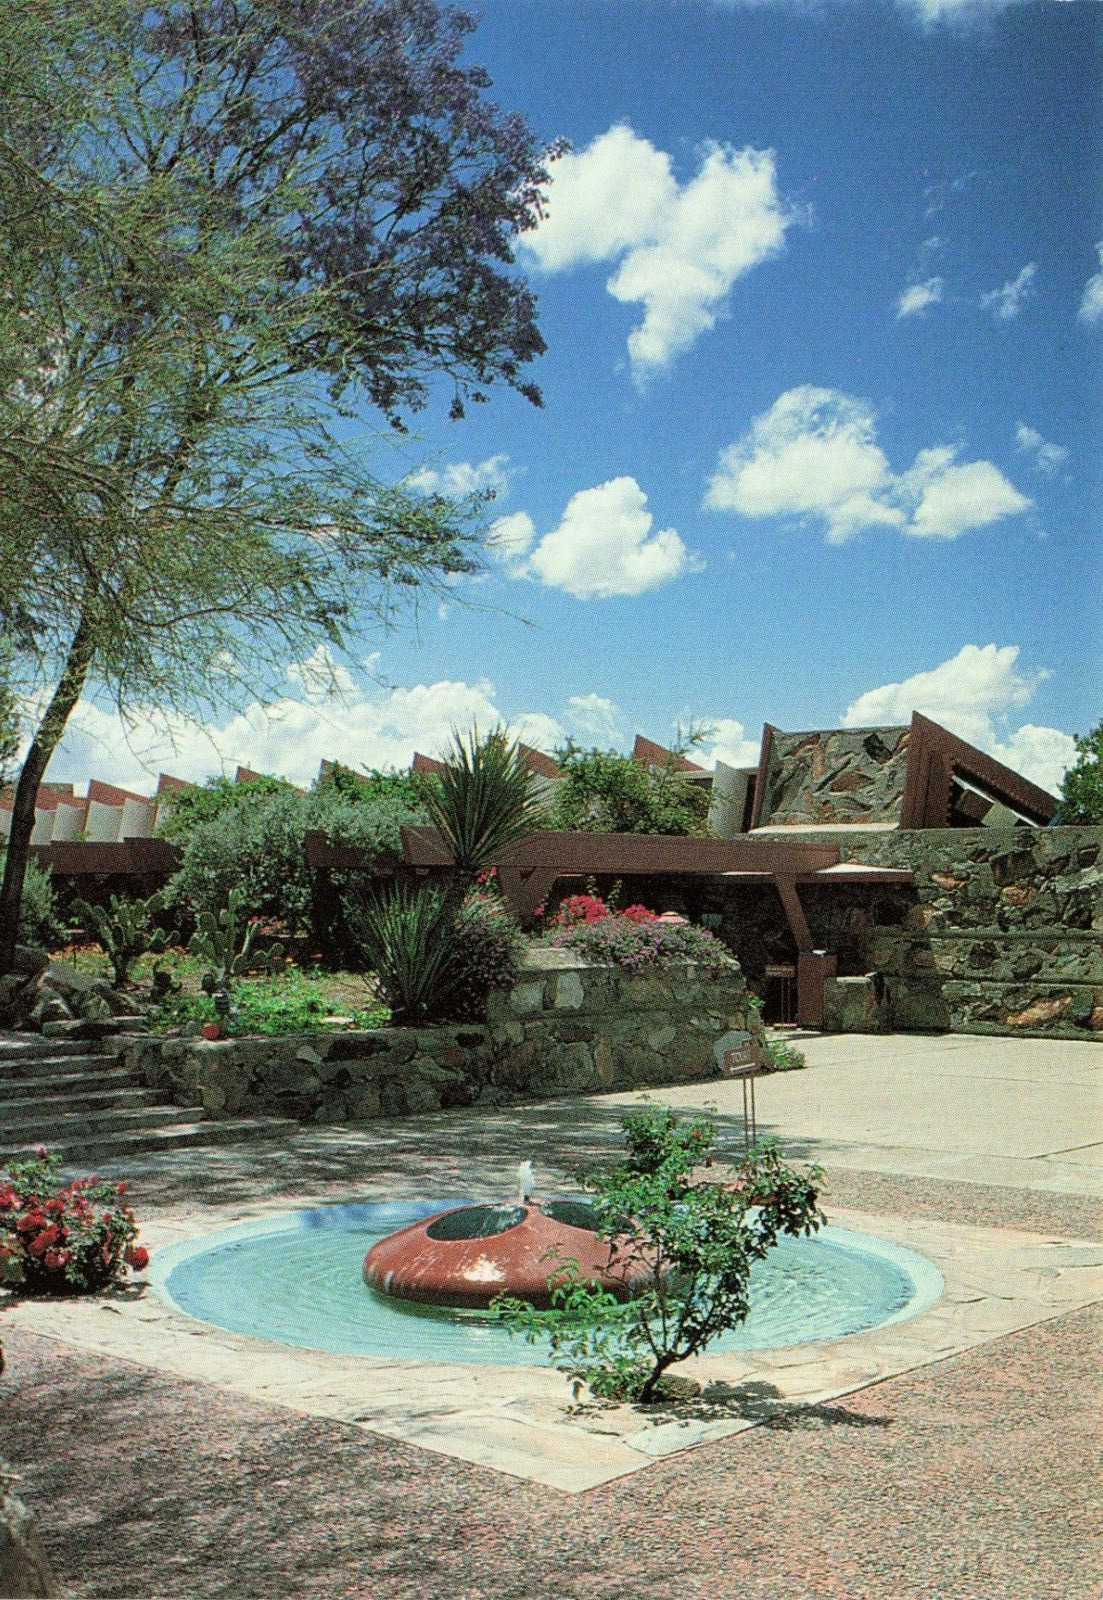 Postcard Headquarters for the Frank Lloyd Wright Foundation, Scottsdale, Arizona